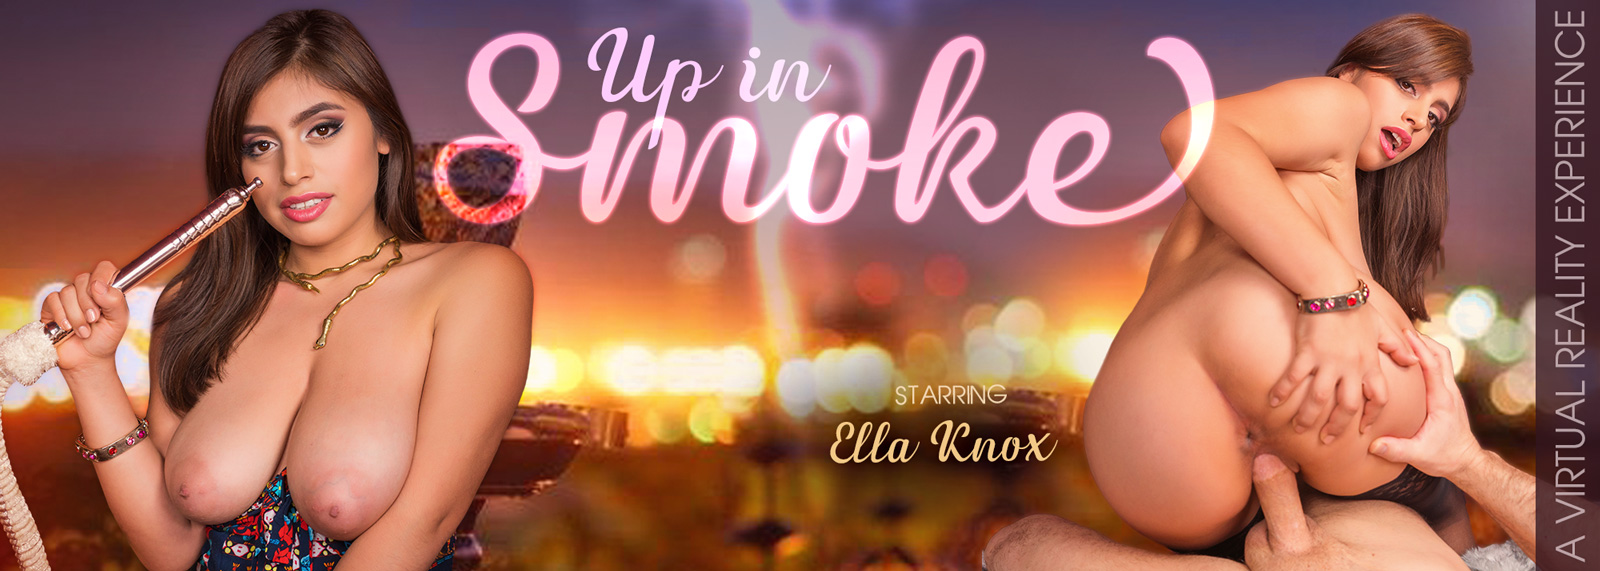 Up In Smoke with Ella Knox  Slideshow